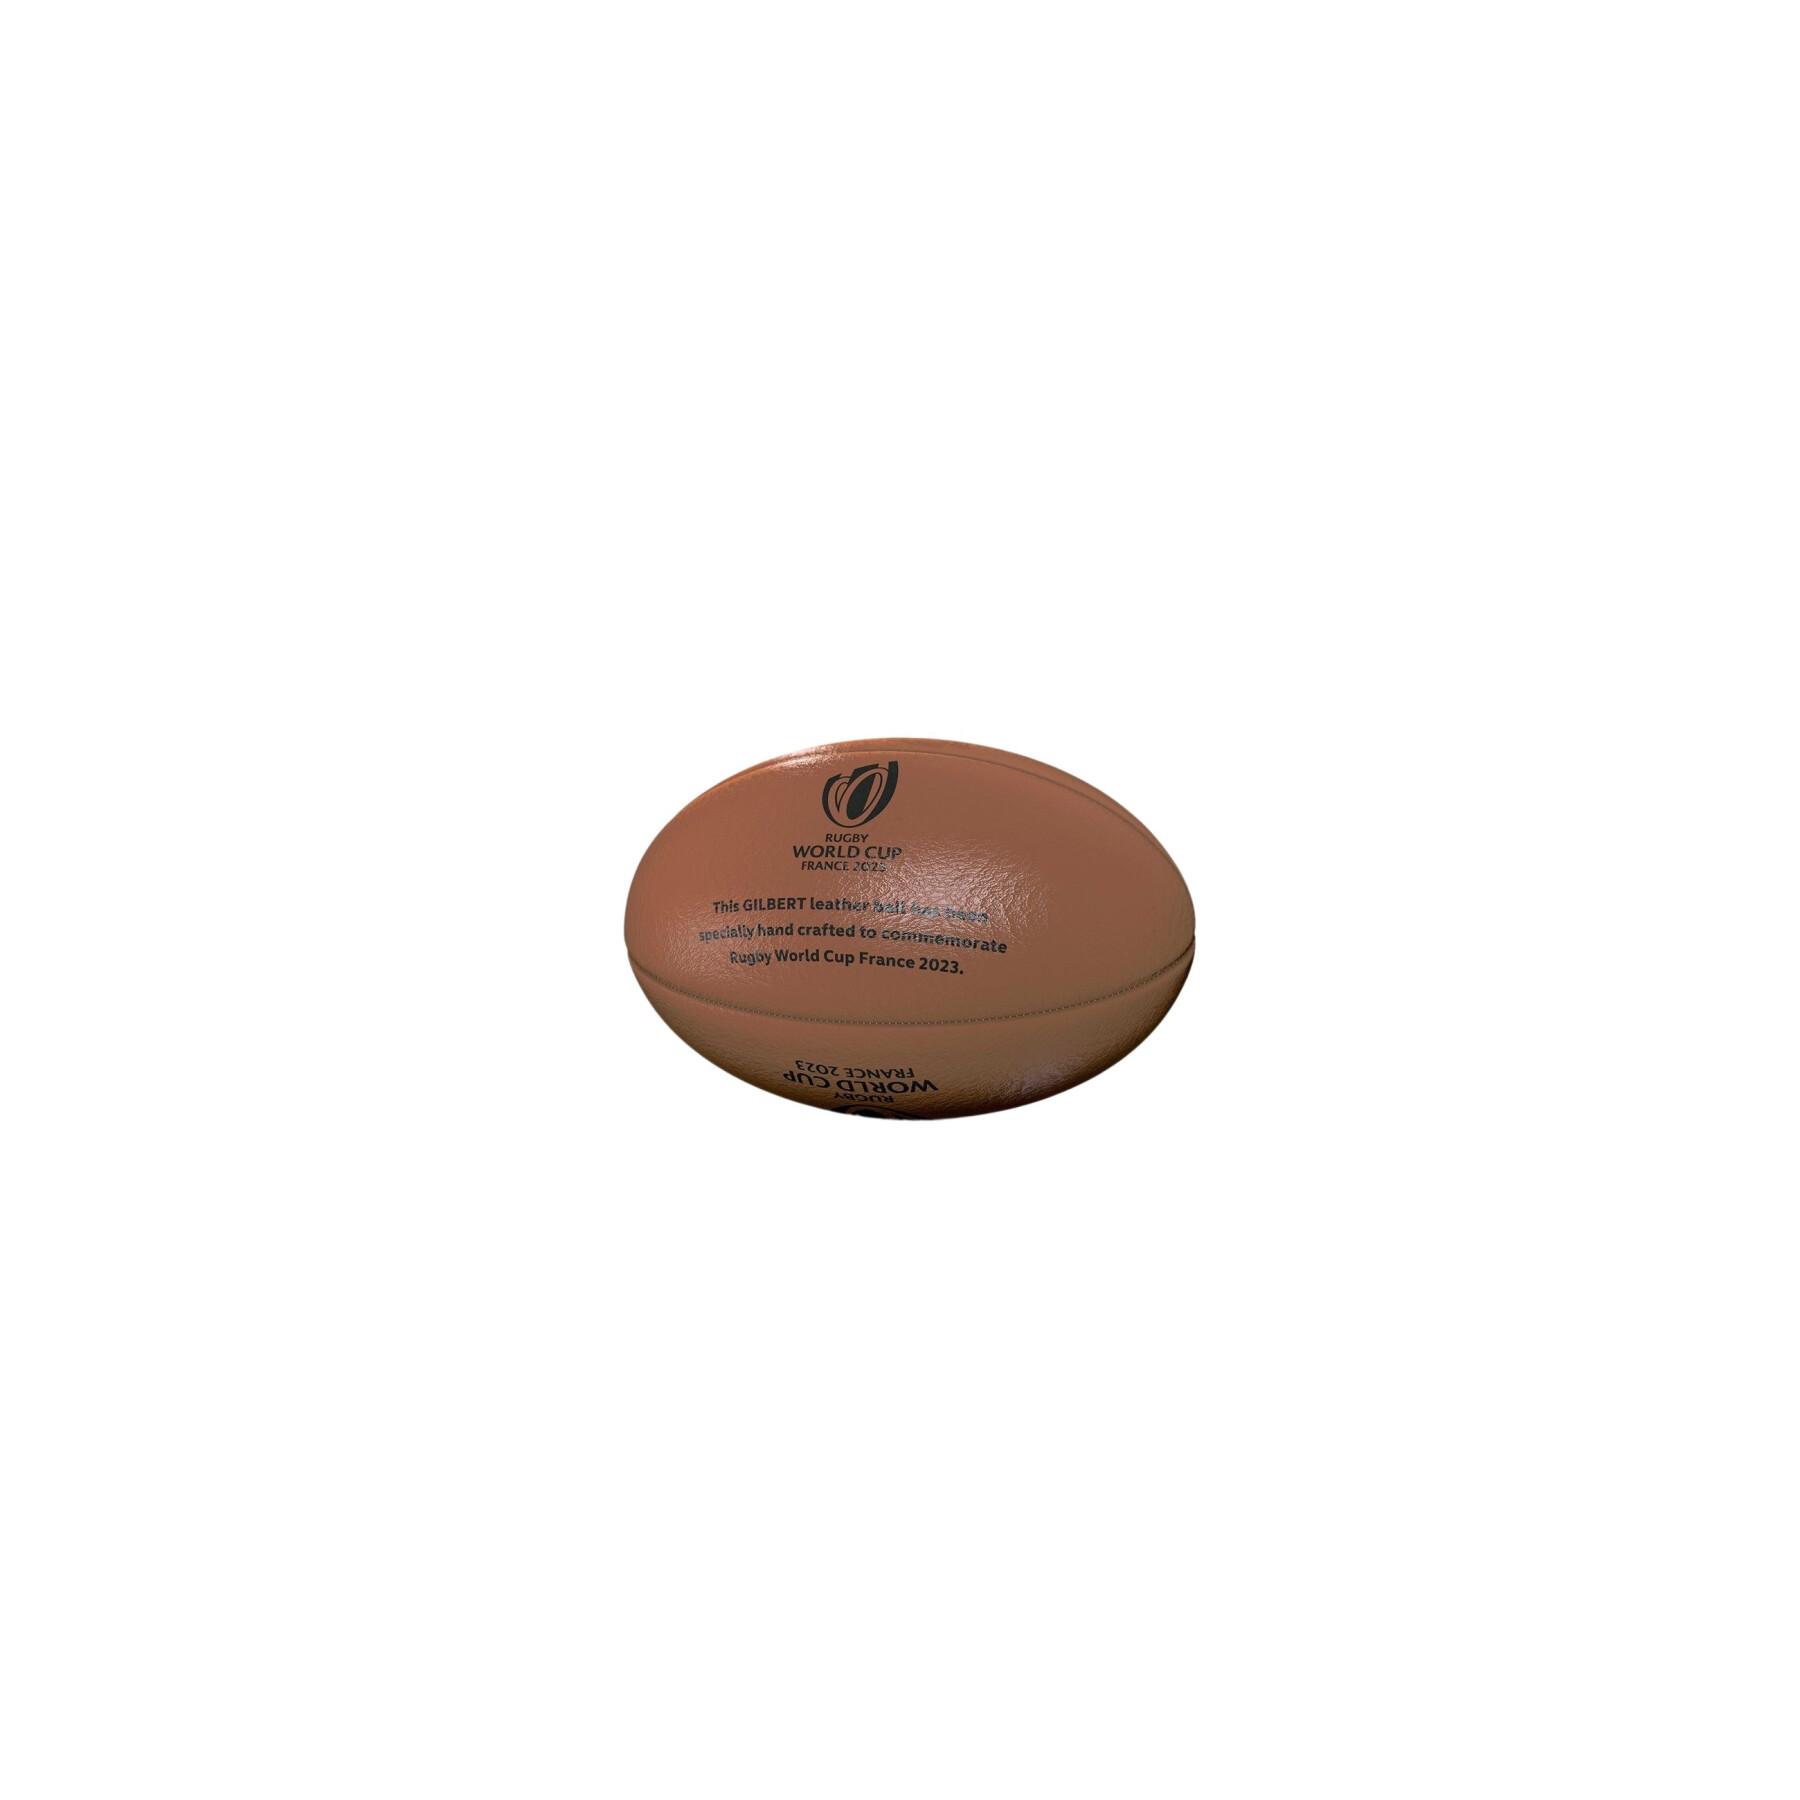 Leather ball Gilbert RWC 2023